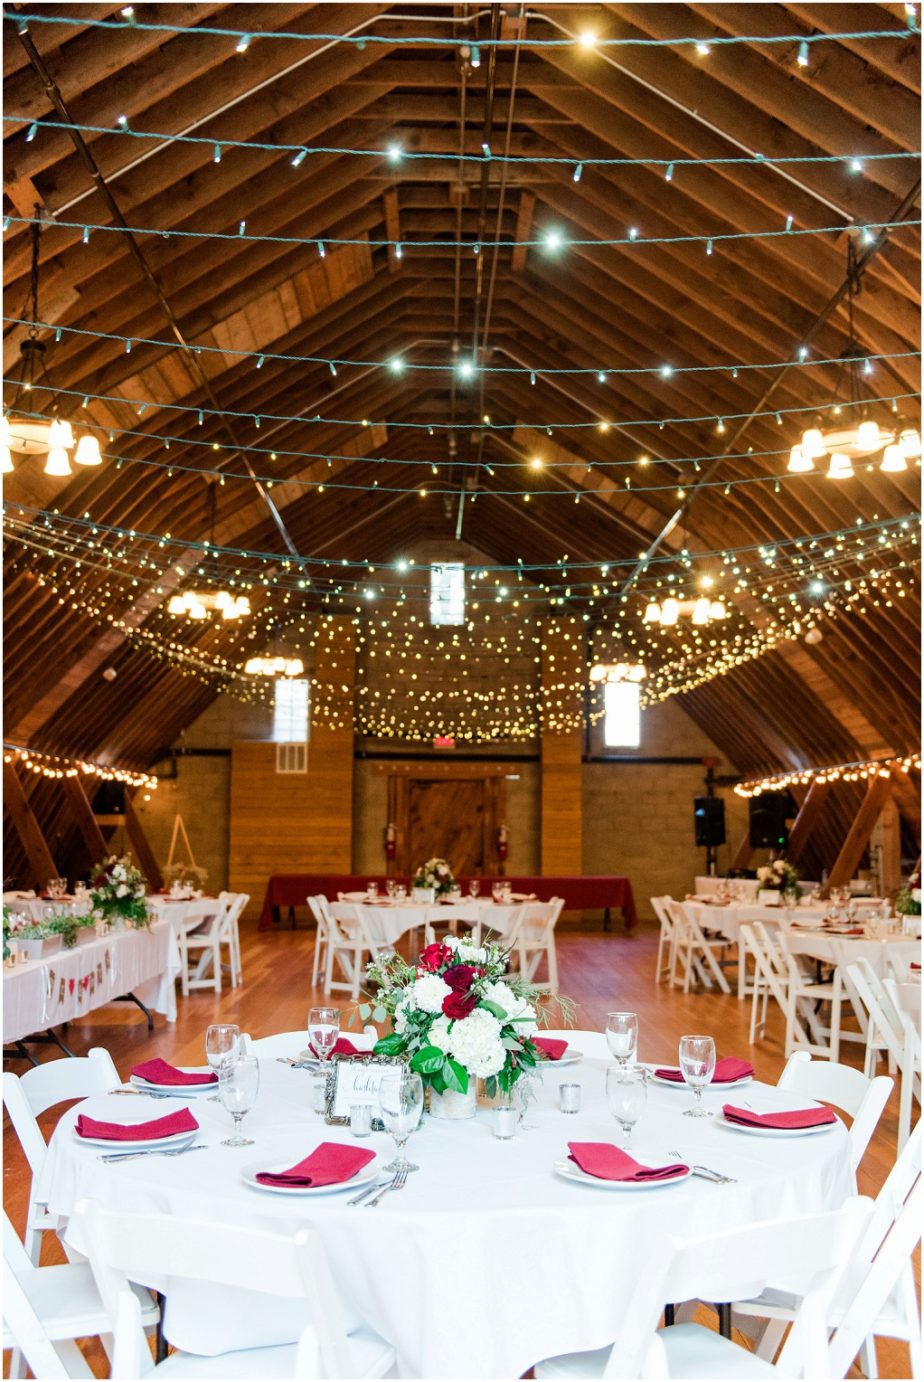 Pine River Ranch Wedding Reception Details Photo